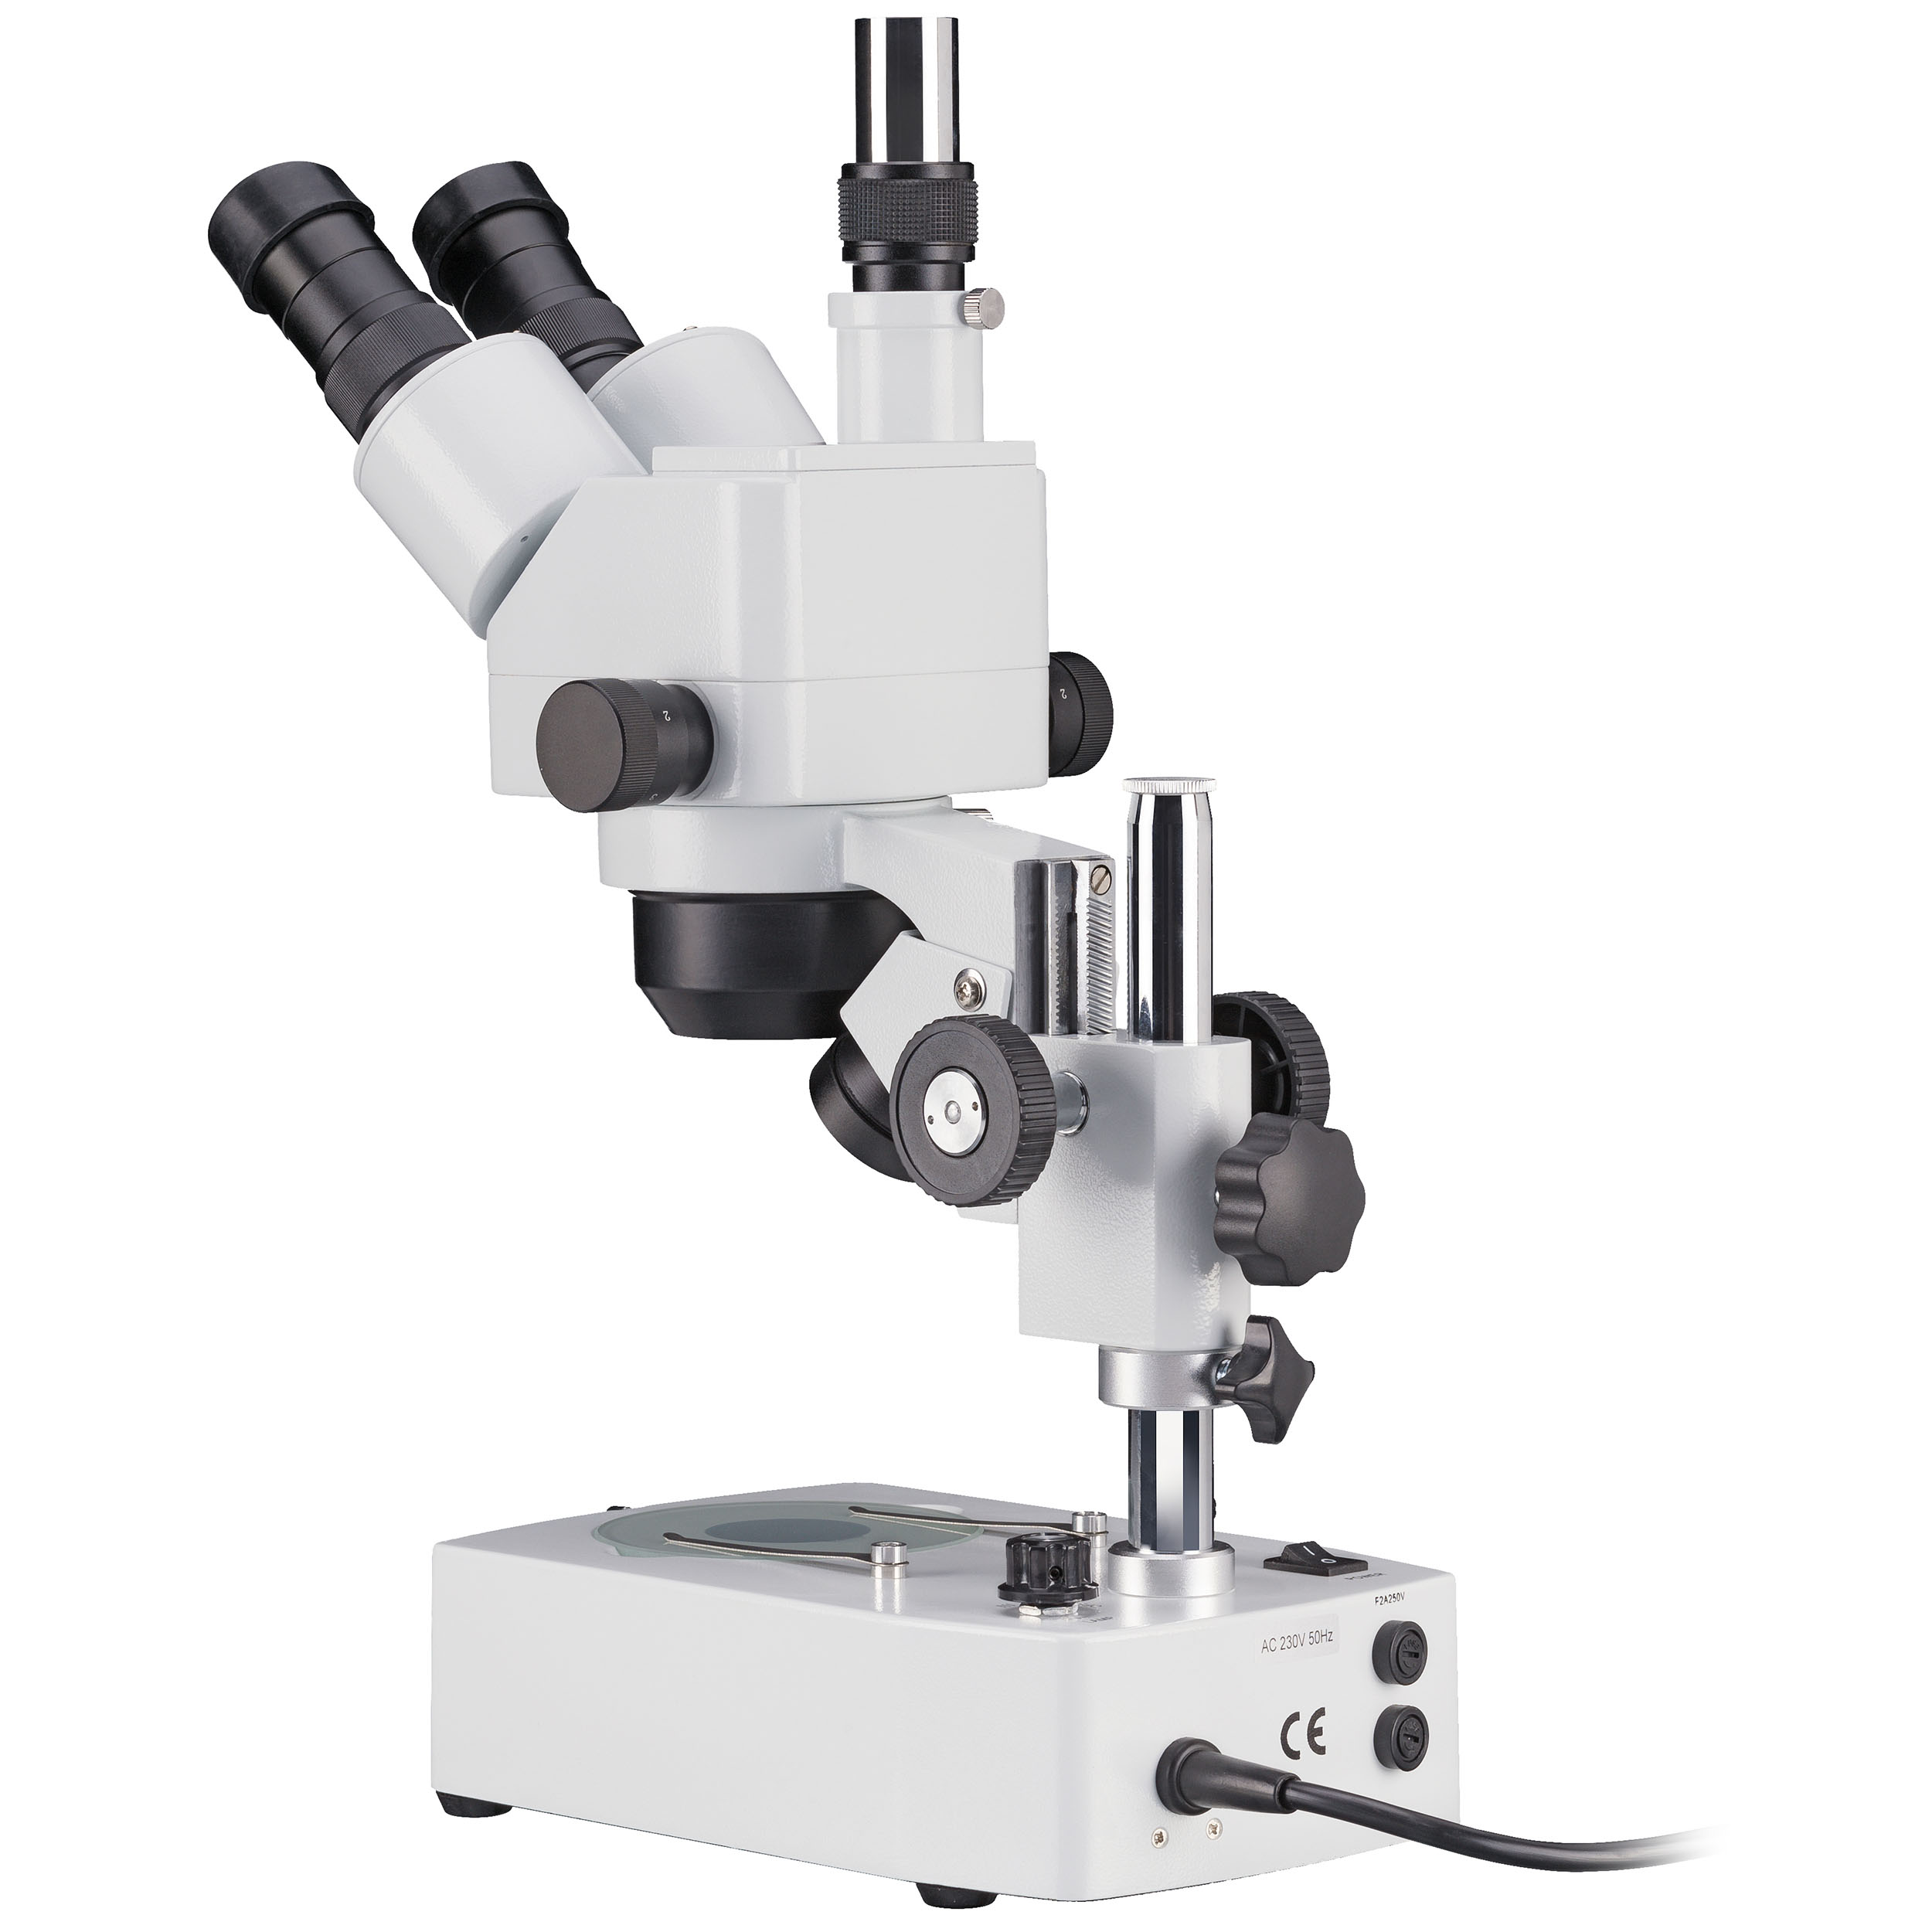 BRESSER Advance ICD 10x-160x Zoom Stereo-Microscope